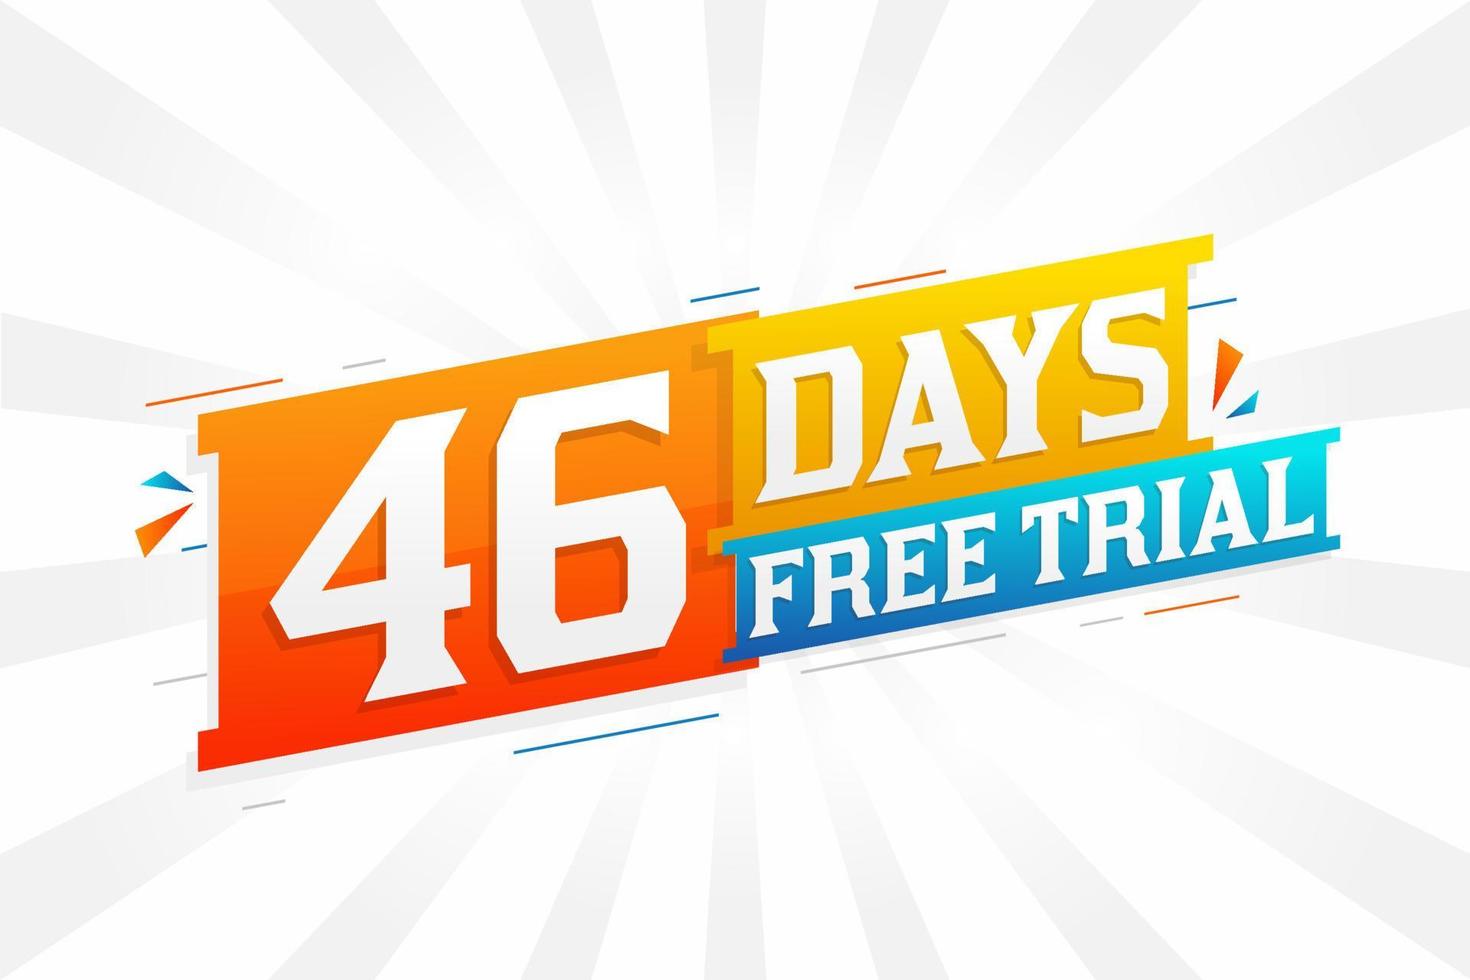 46 Tage kostenlose Testversion, fetter Textvorratvektor vektor